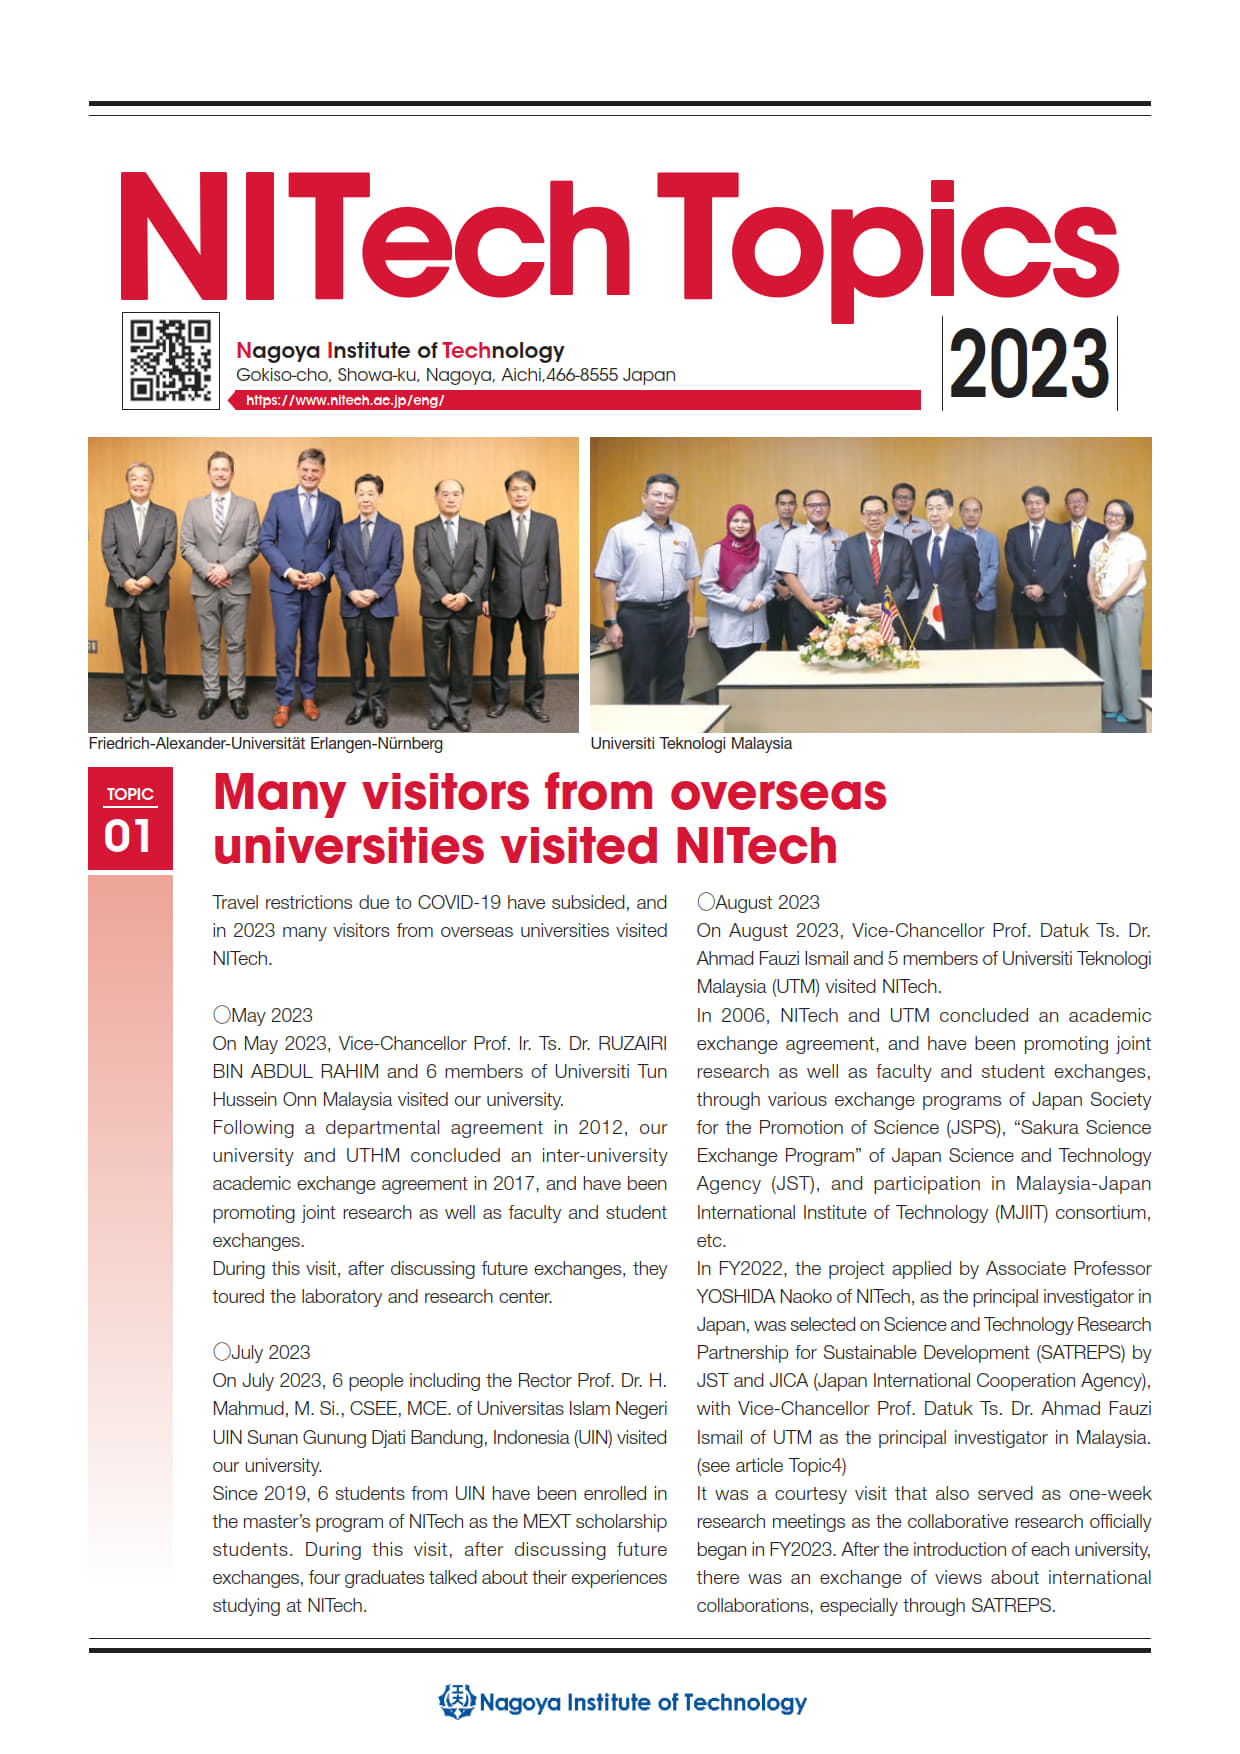 https://www.nitech.ac.jp/eng/int/images/Nitech%20Topics%202023-1.jpg